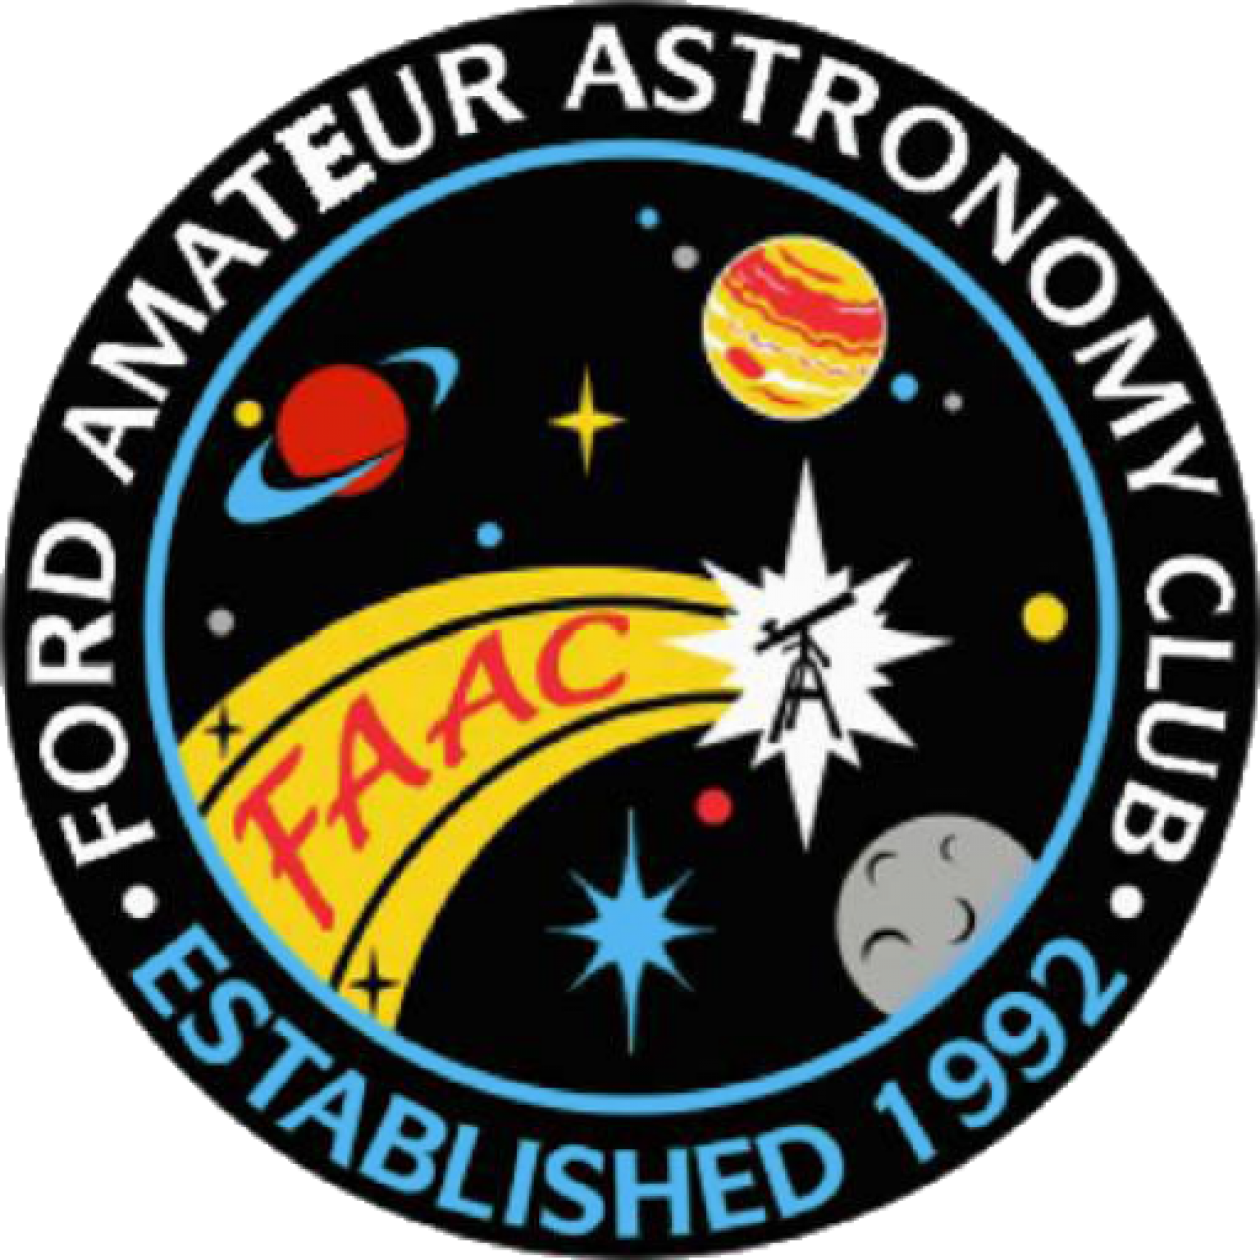 Ford Amateur Astronomy Club